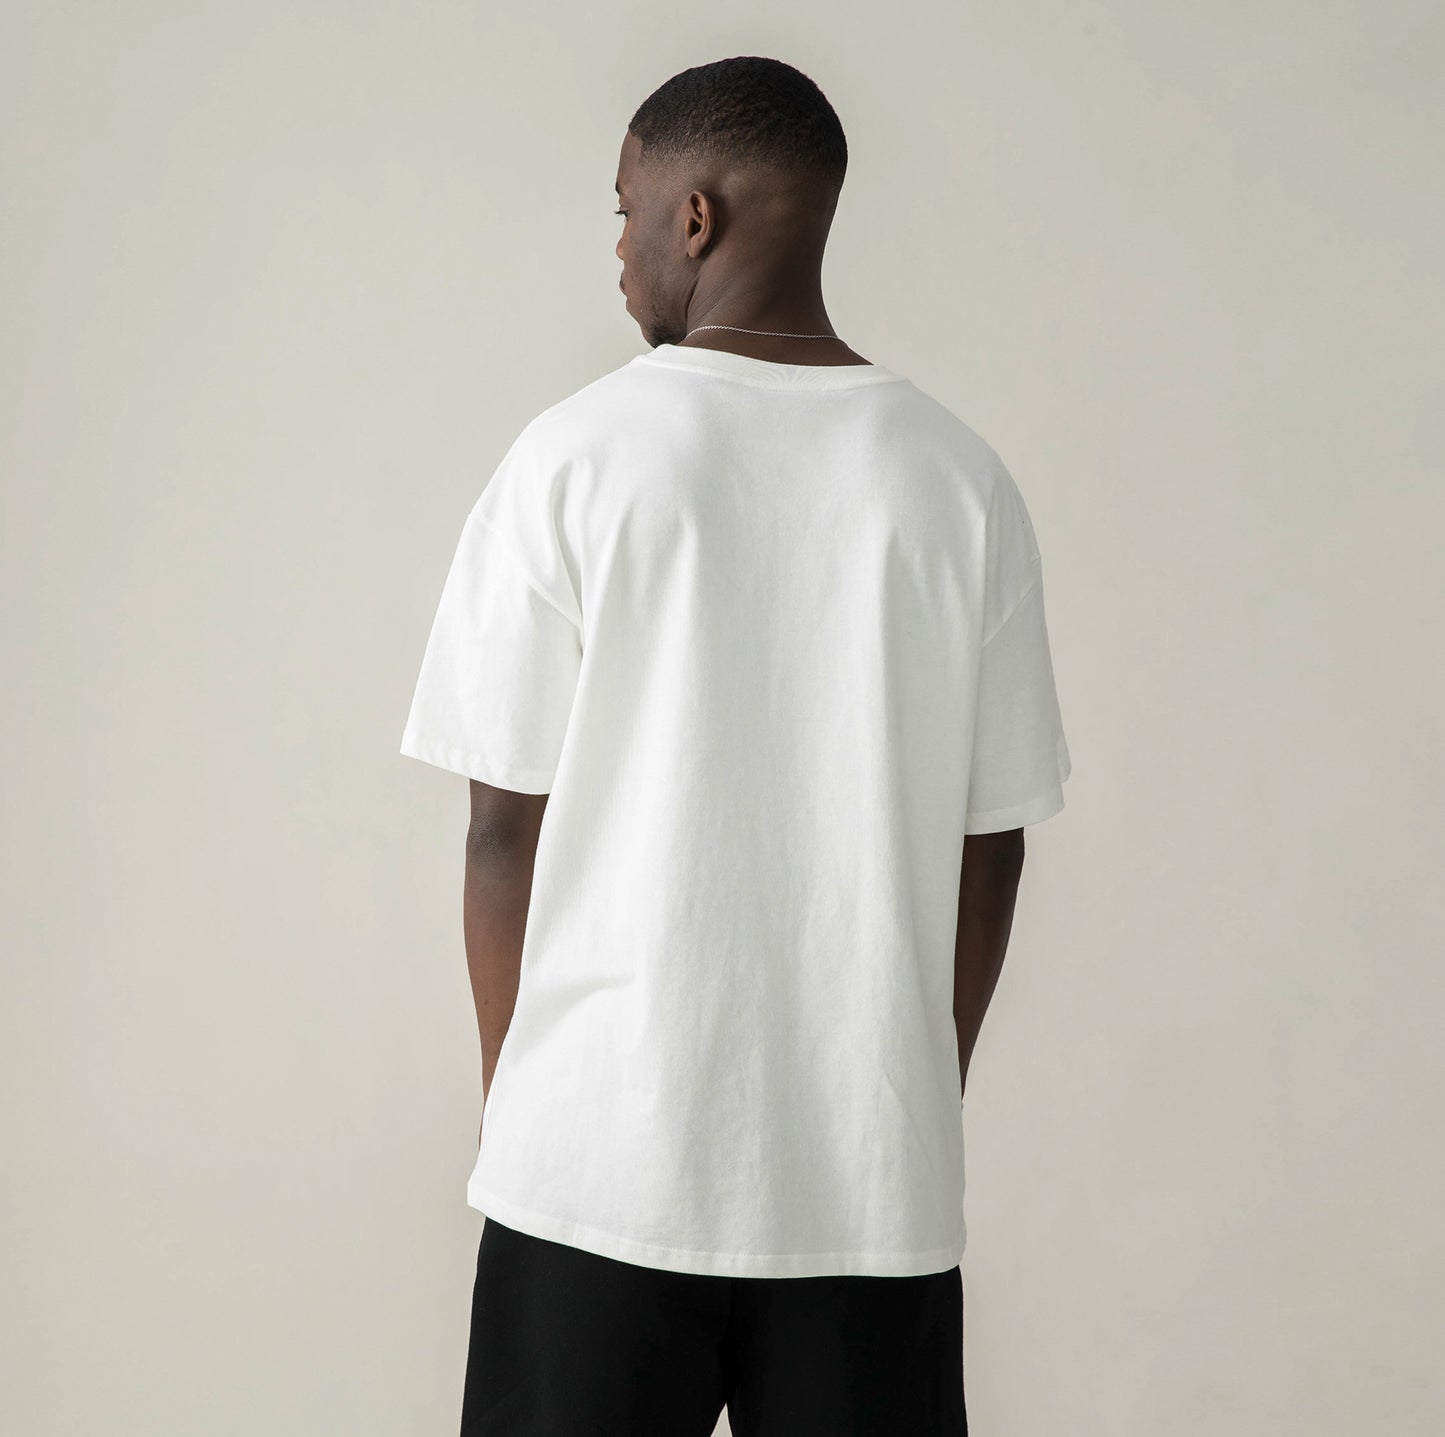 Back view of model in $MILE (BACK PRINT) - Unisex Oversized T-shirt (WHITE)